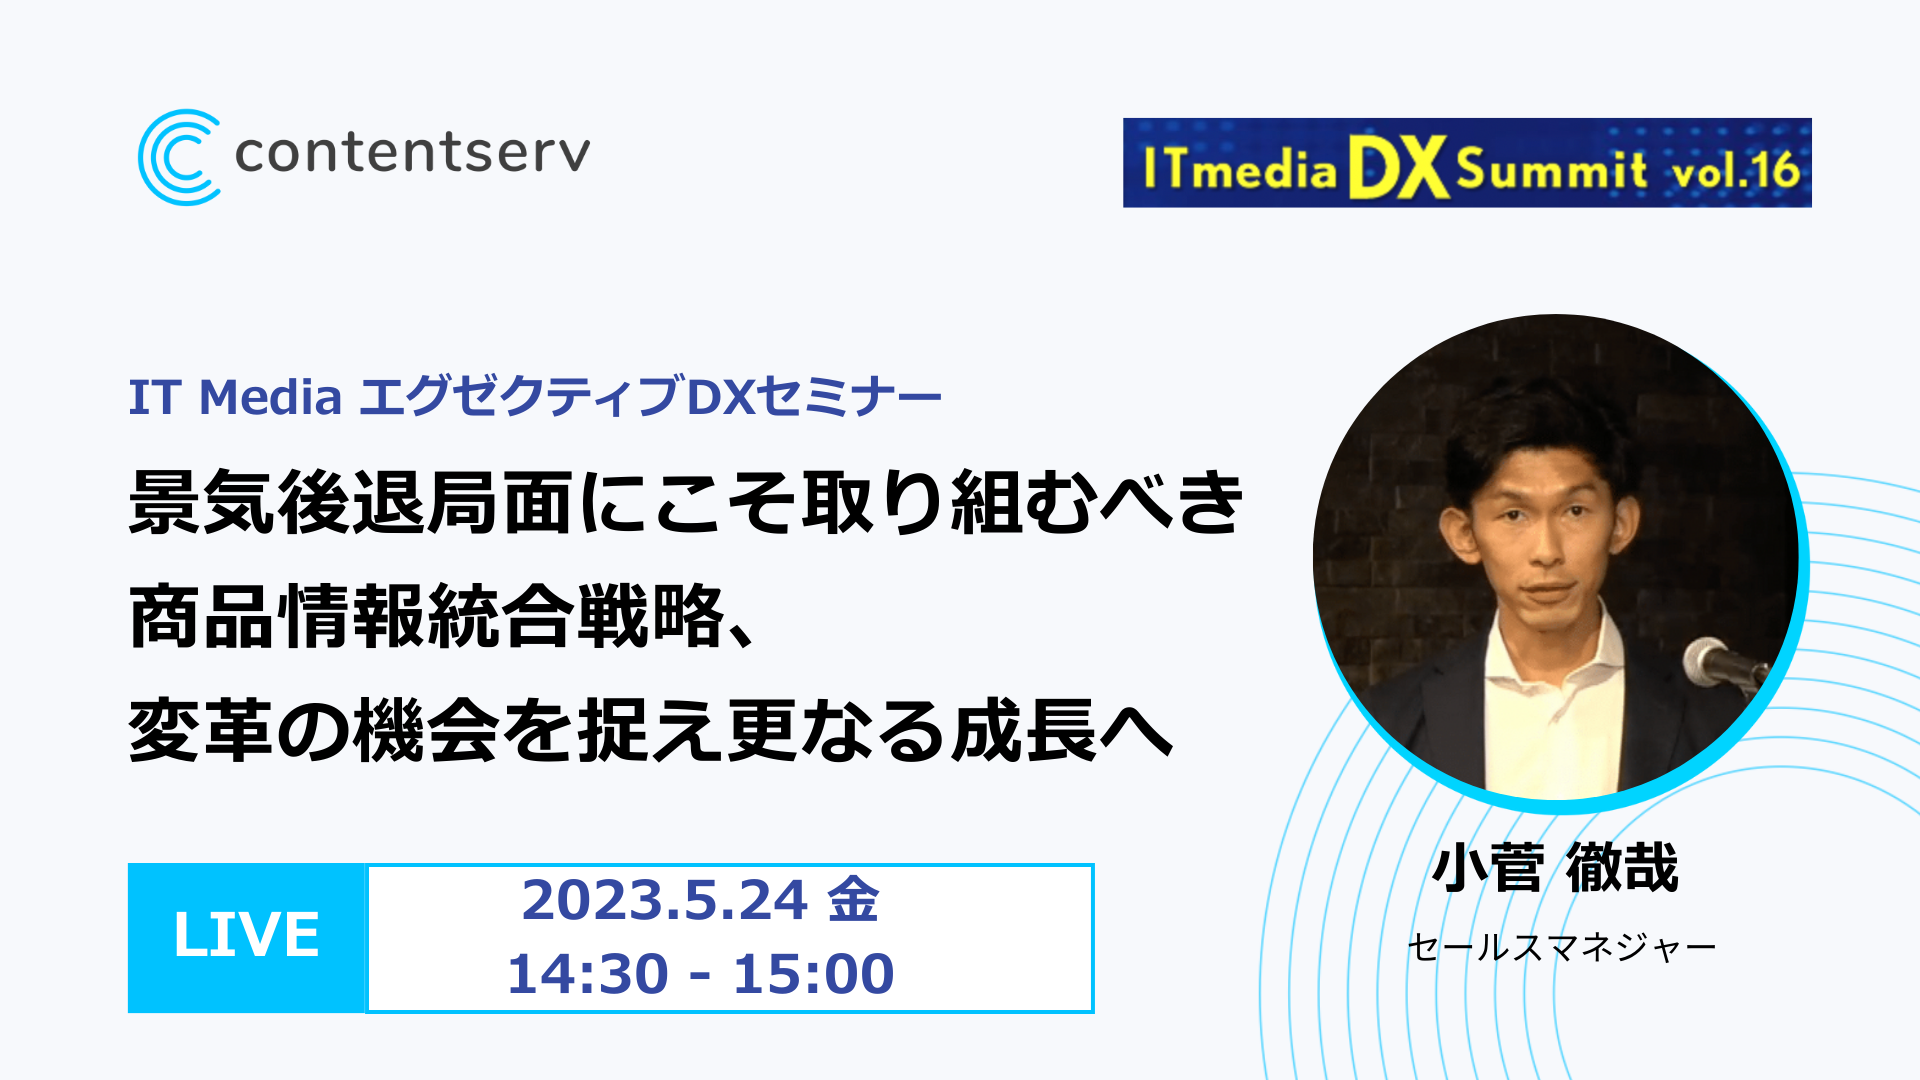 ja-it-media-executive-dx-seminar-1920x1080-r01